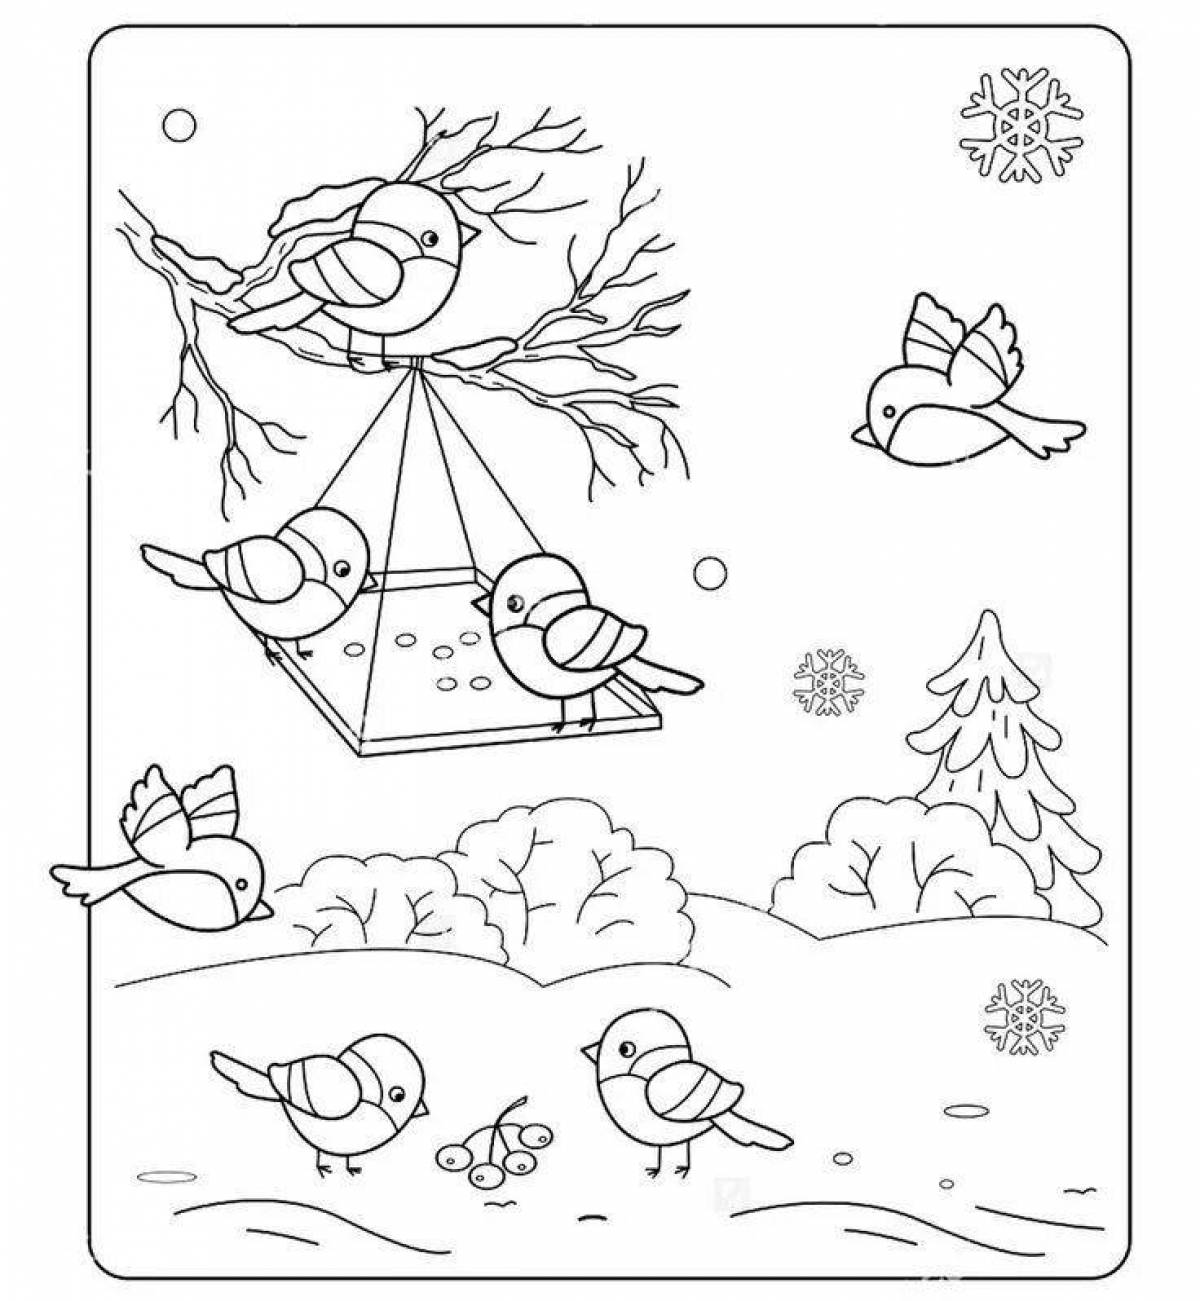 Birds in winter for kids #1